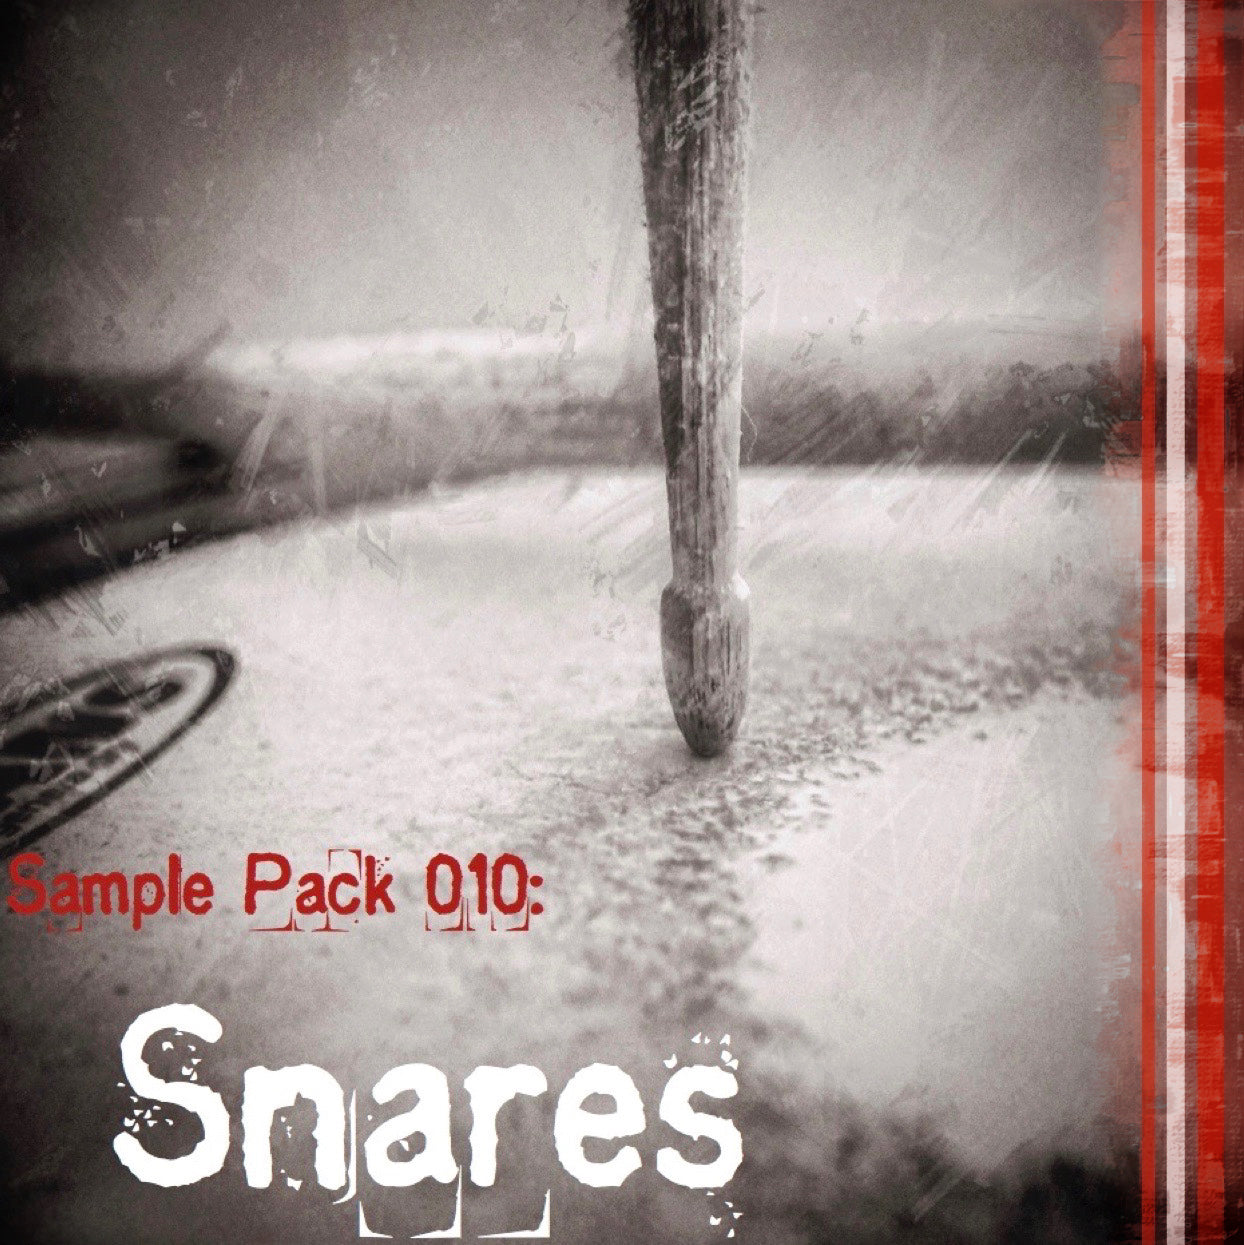 Sample Pack 010: Snares